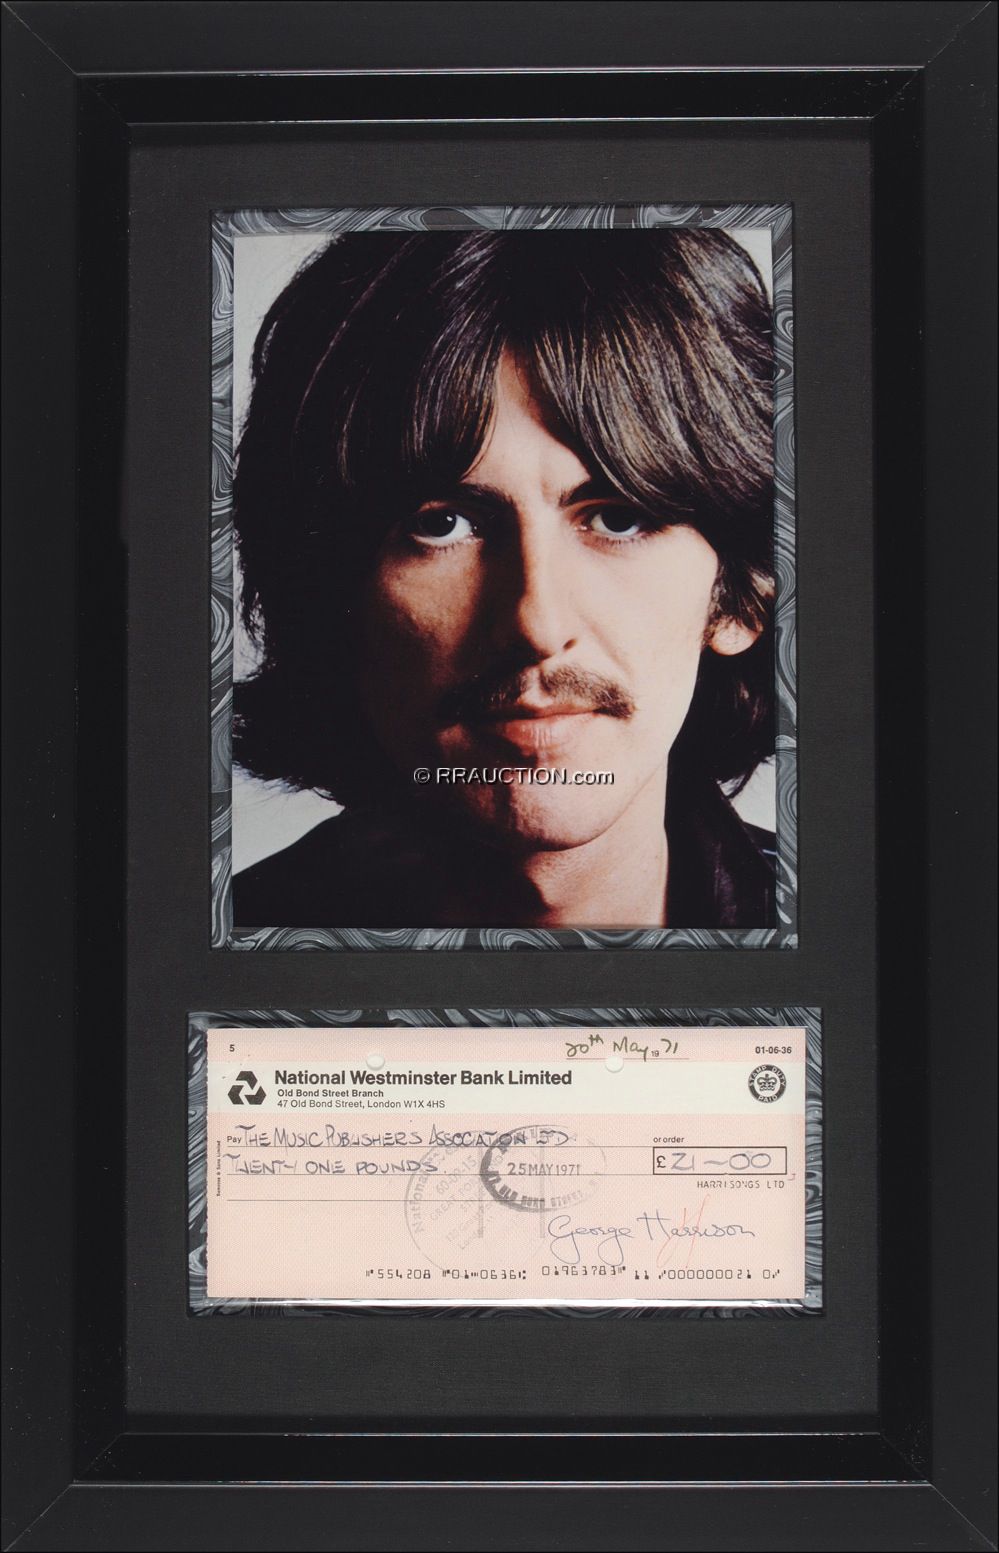 Lot #712 The Beatles: George Harrison - Image 1